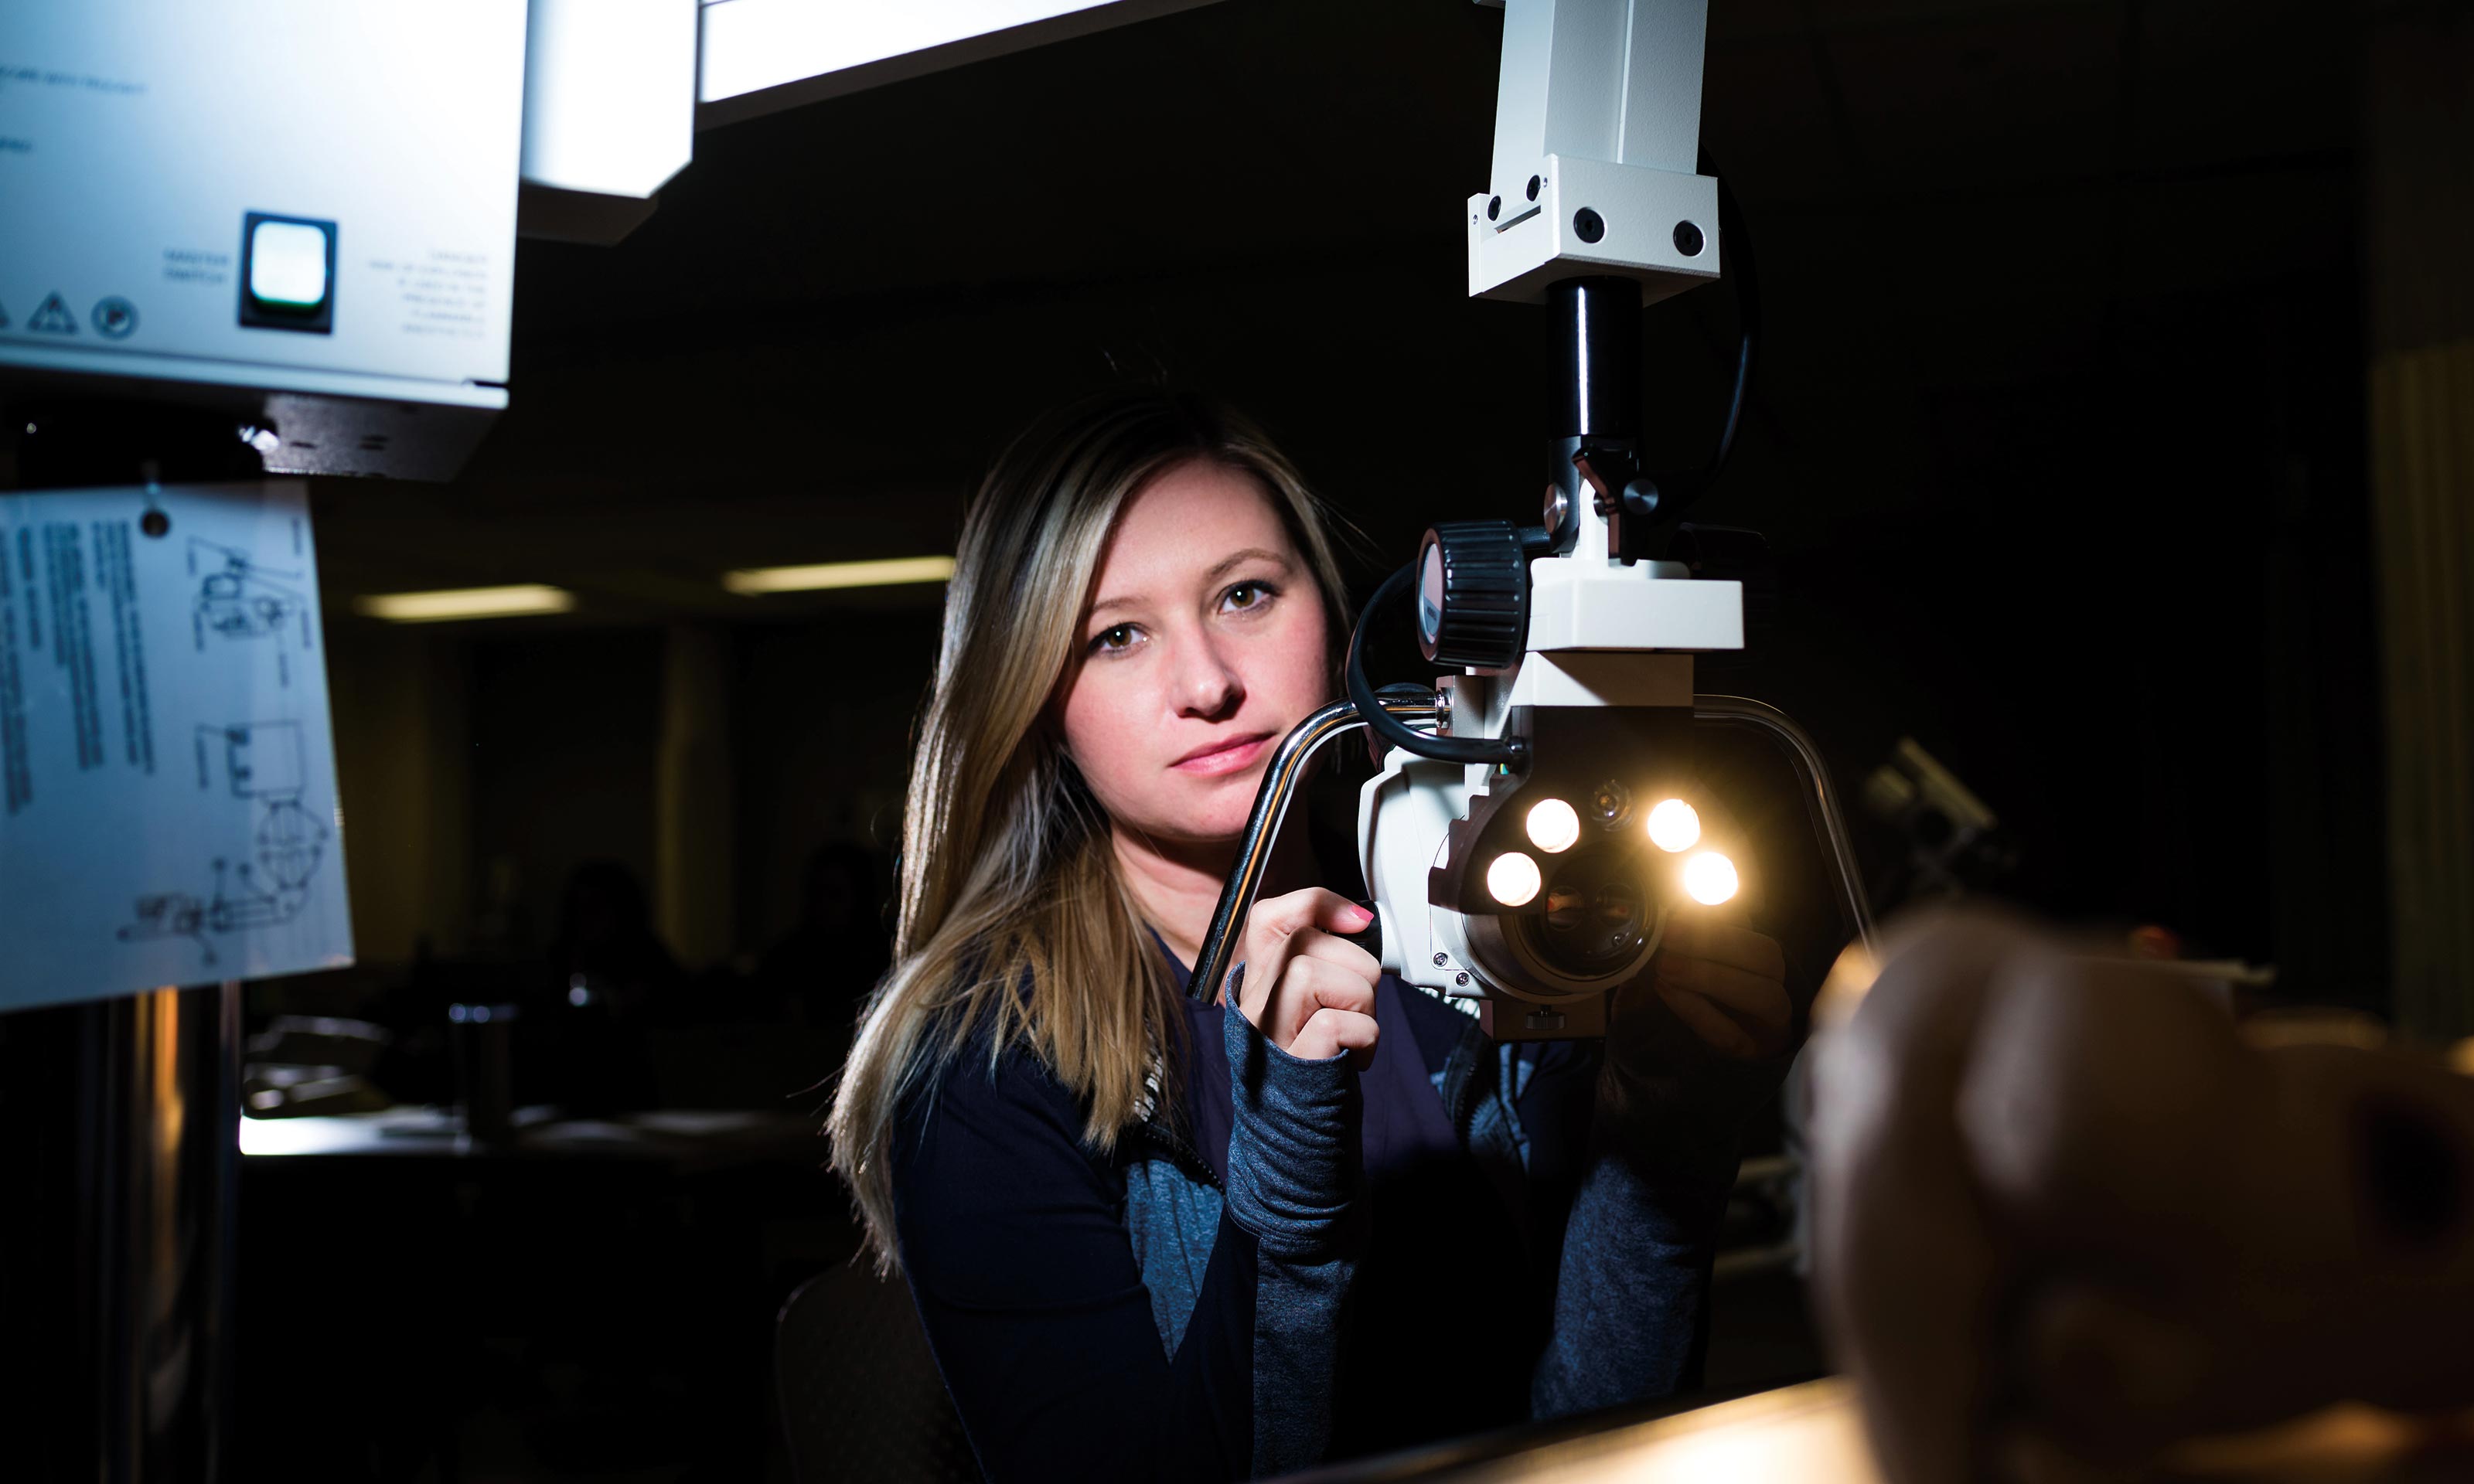 Forensic nursing student looks through a colposcope